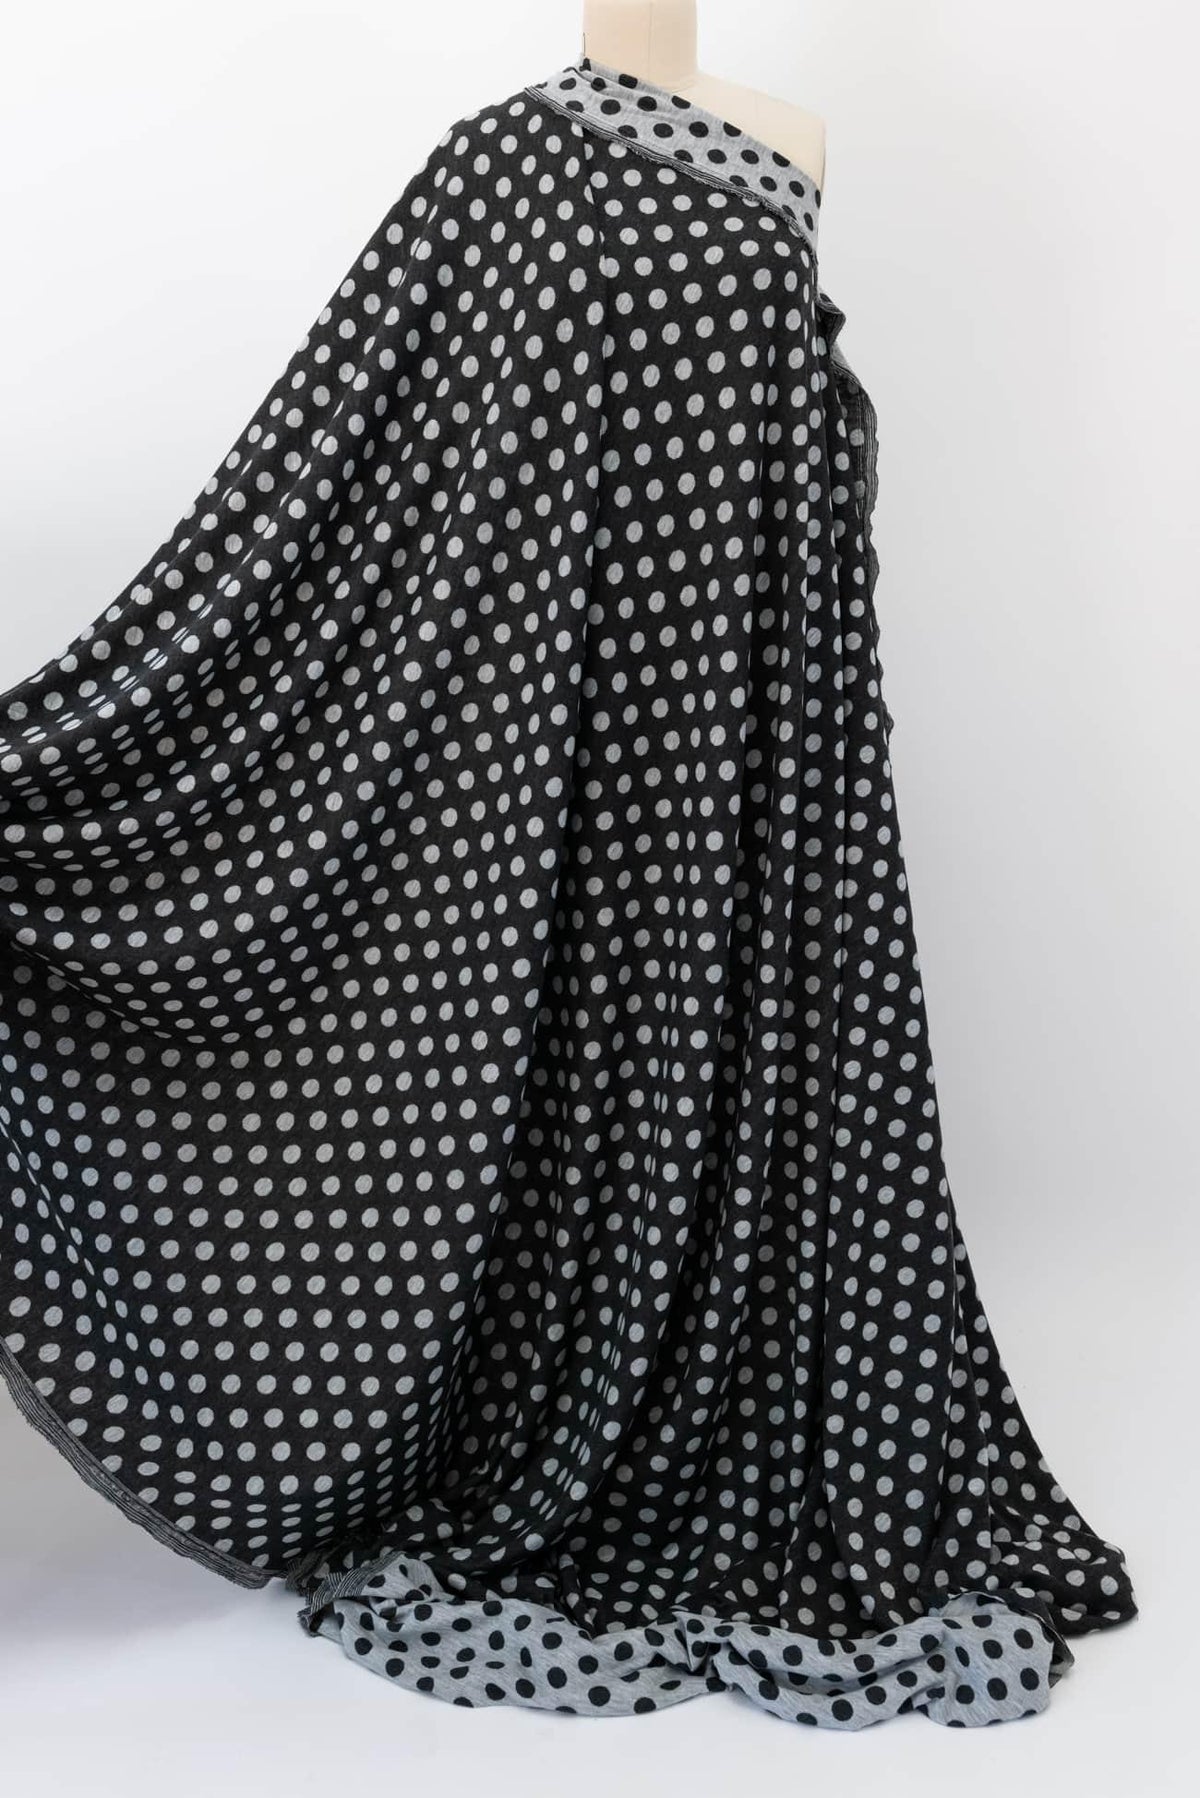 Double Dots Sweater Knit - Marcy Tilton Fabrics